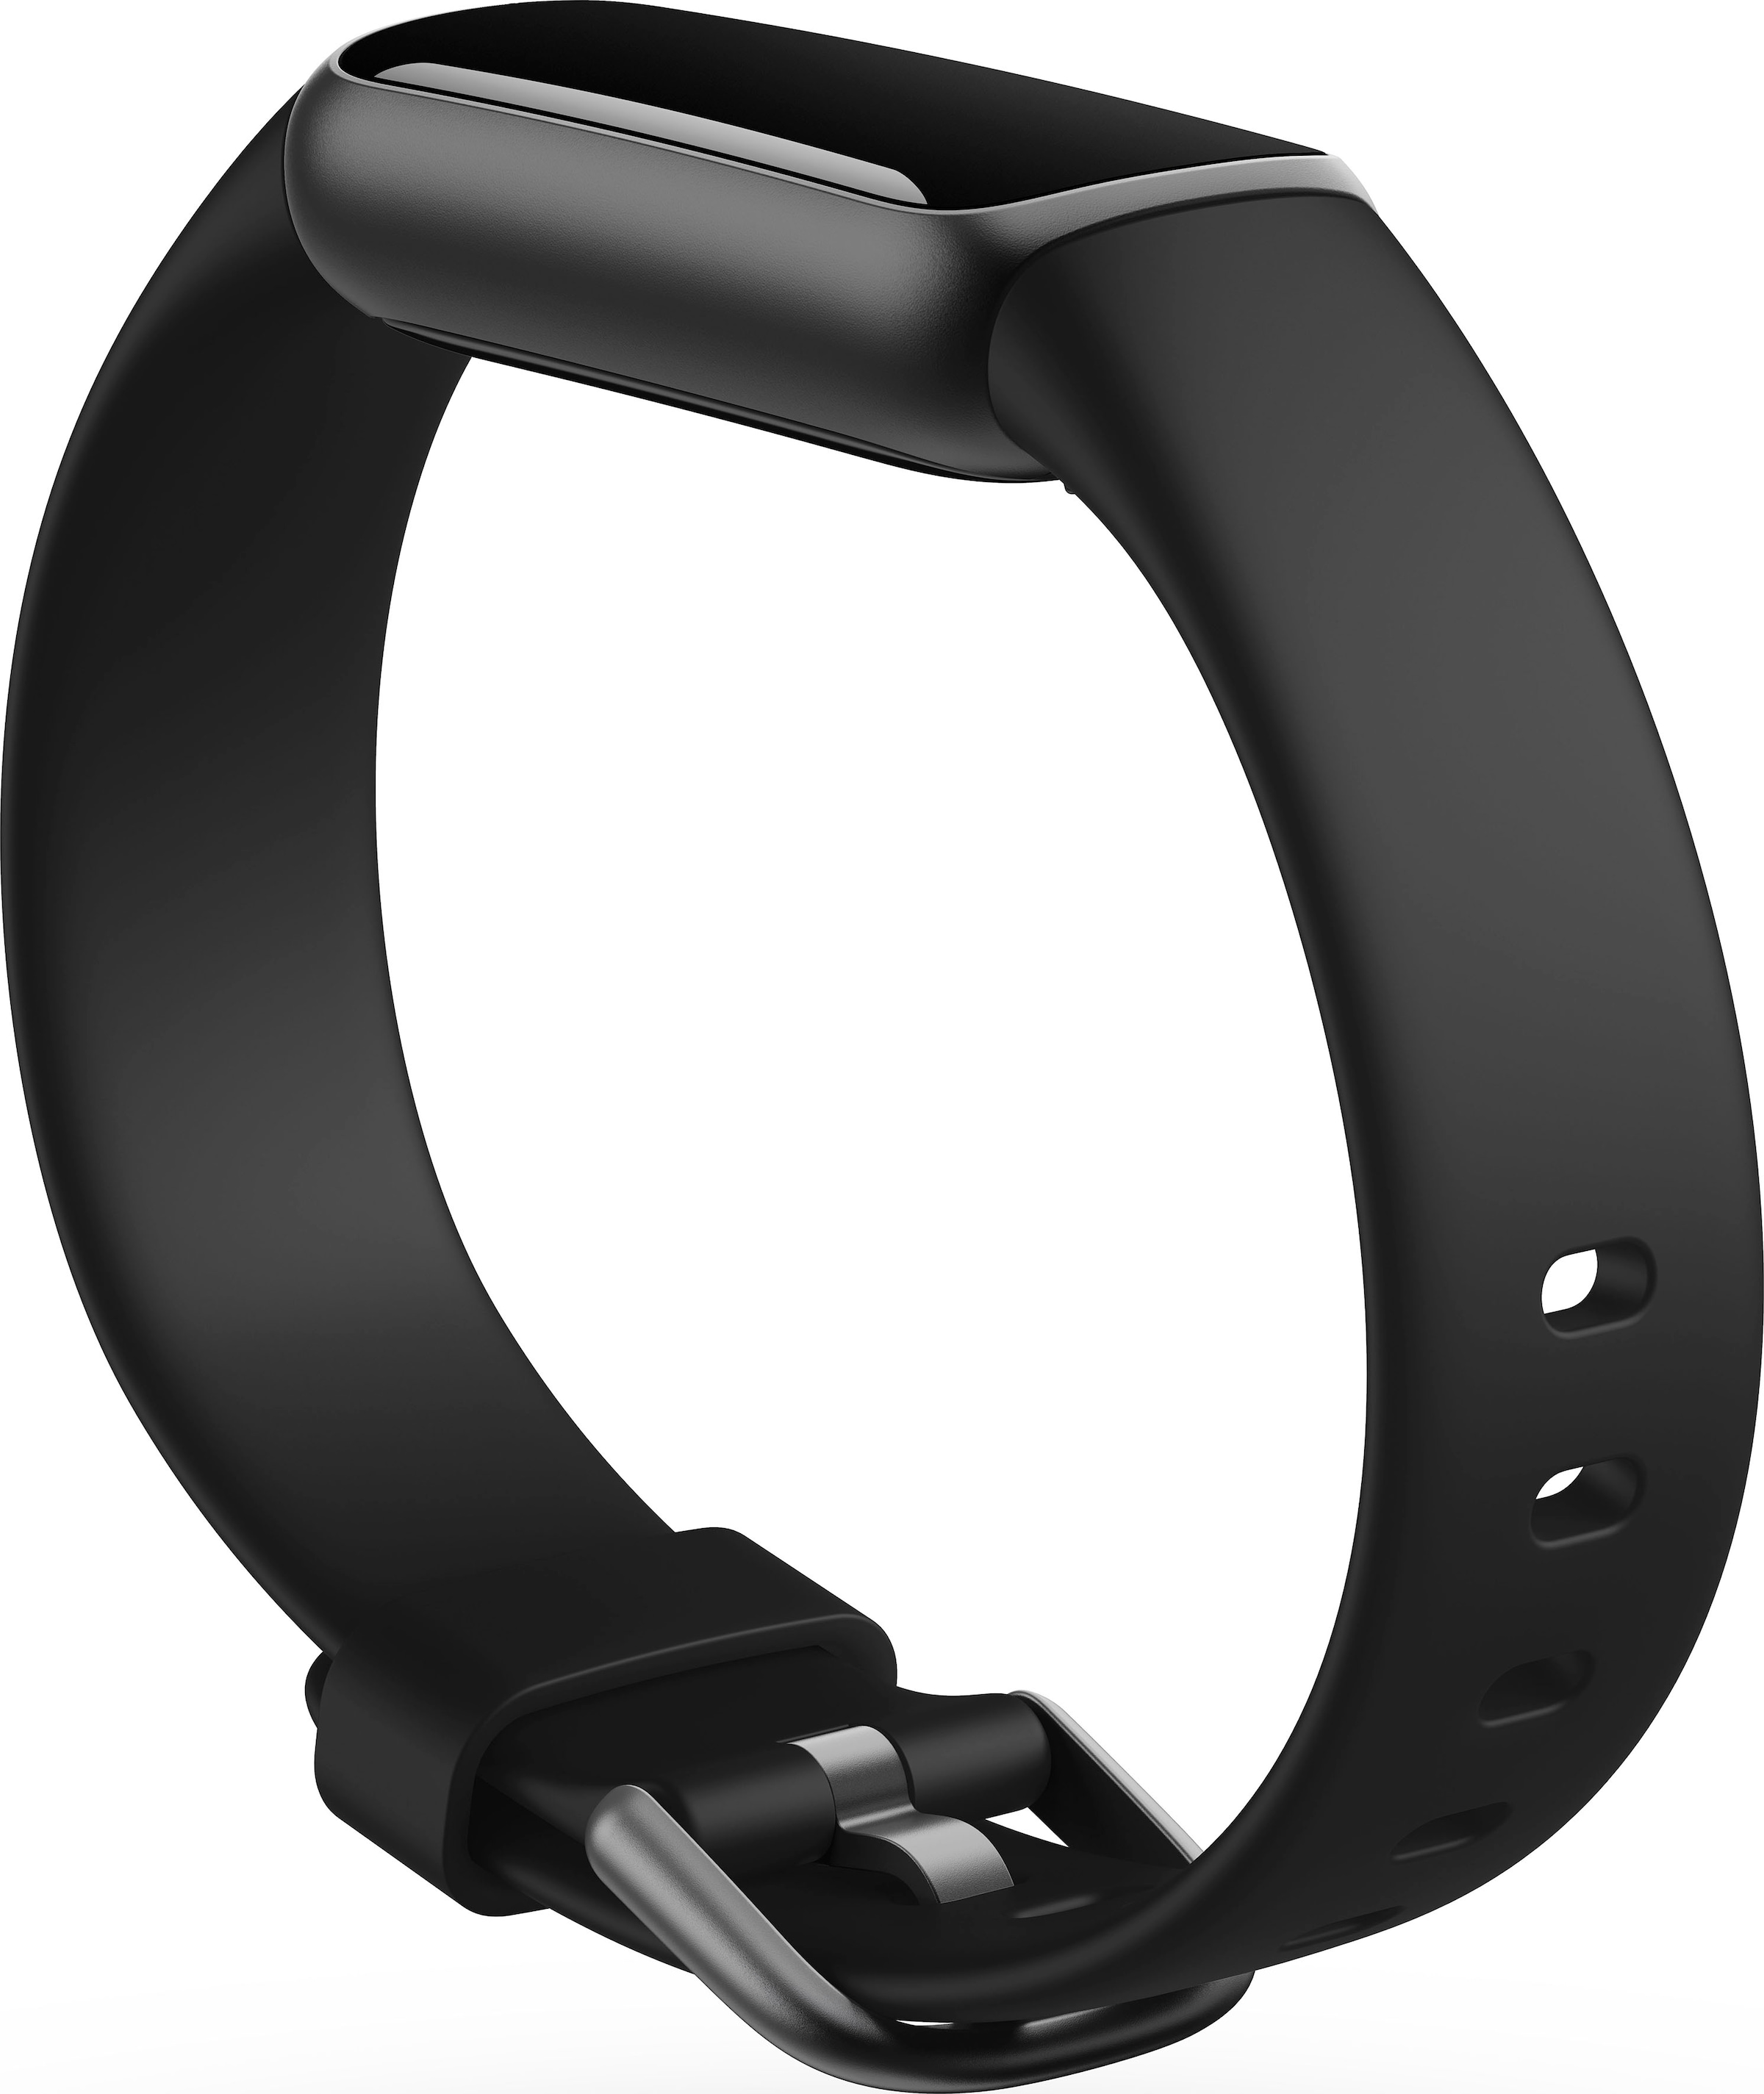 Smartwatch Google BAUR by »Luxe« | fitbit